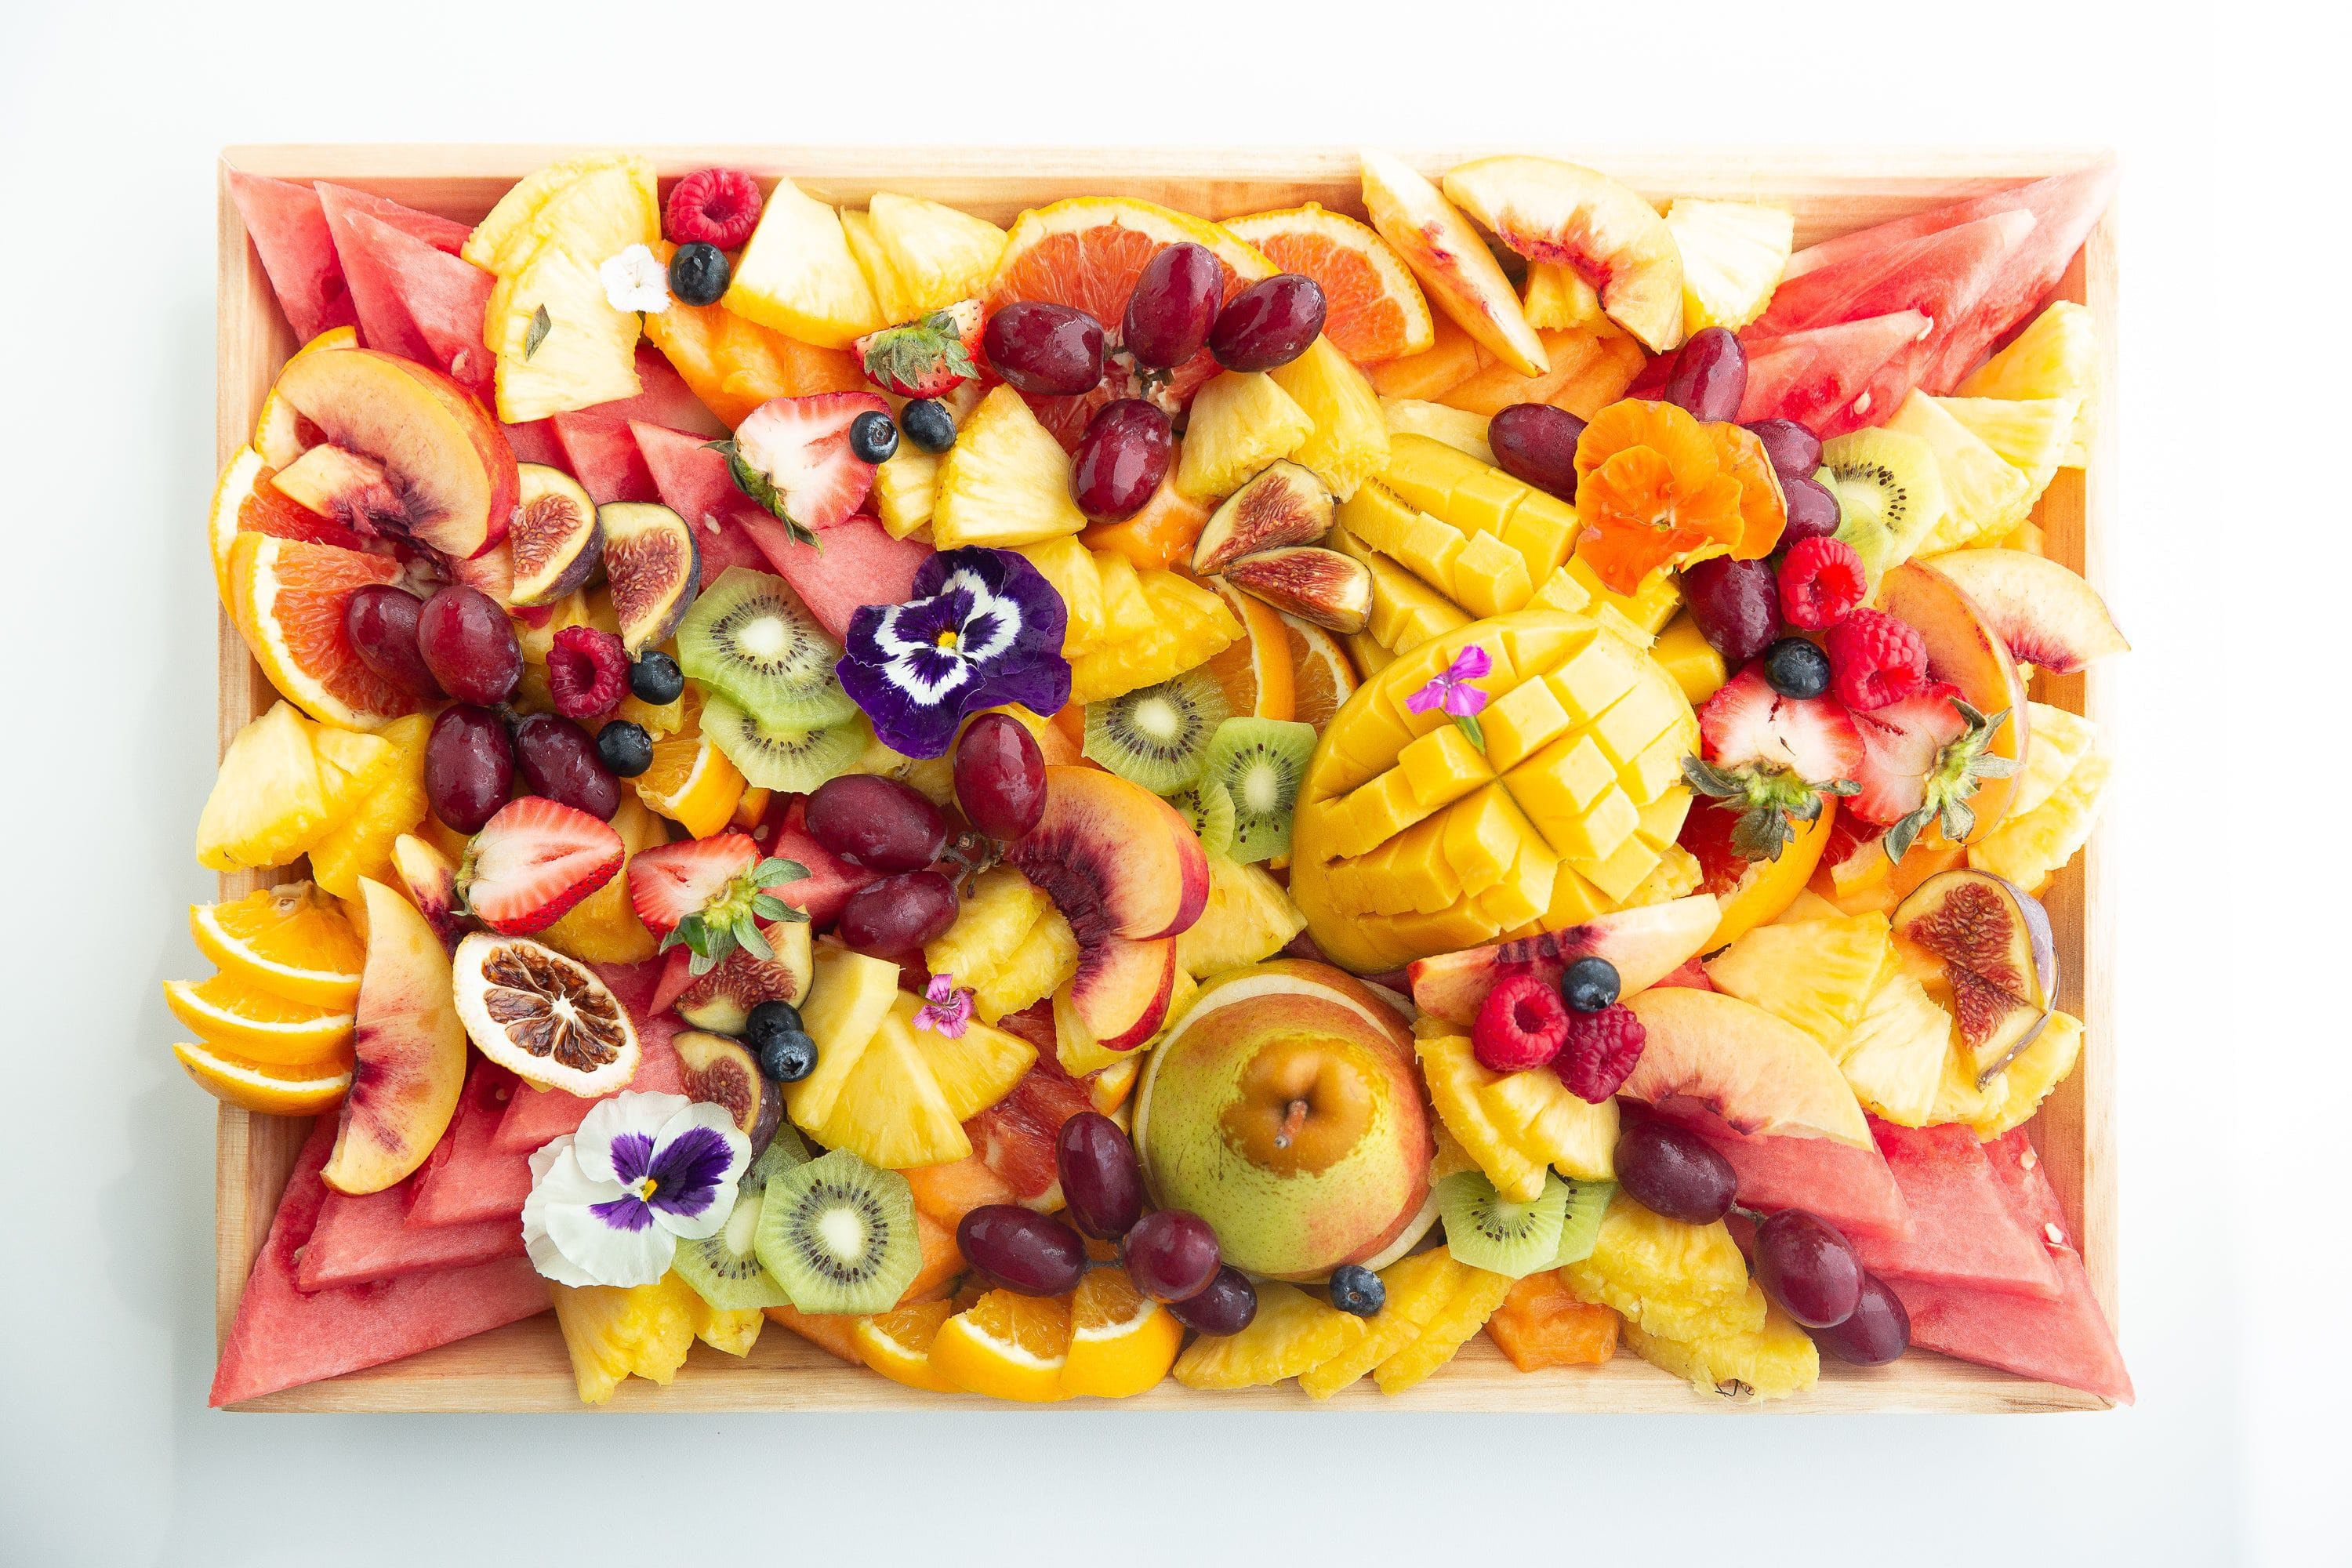 Best fruit platter bundle Toronto Ontario